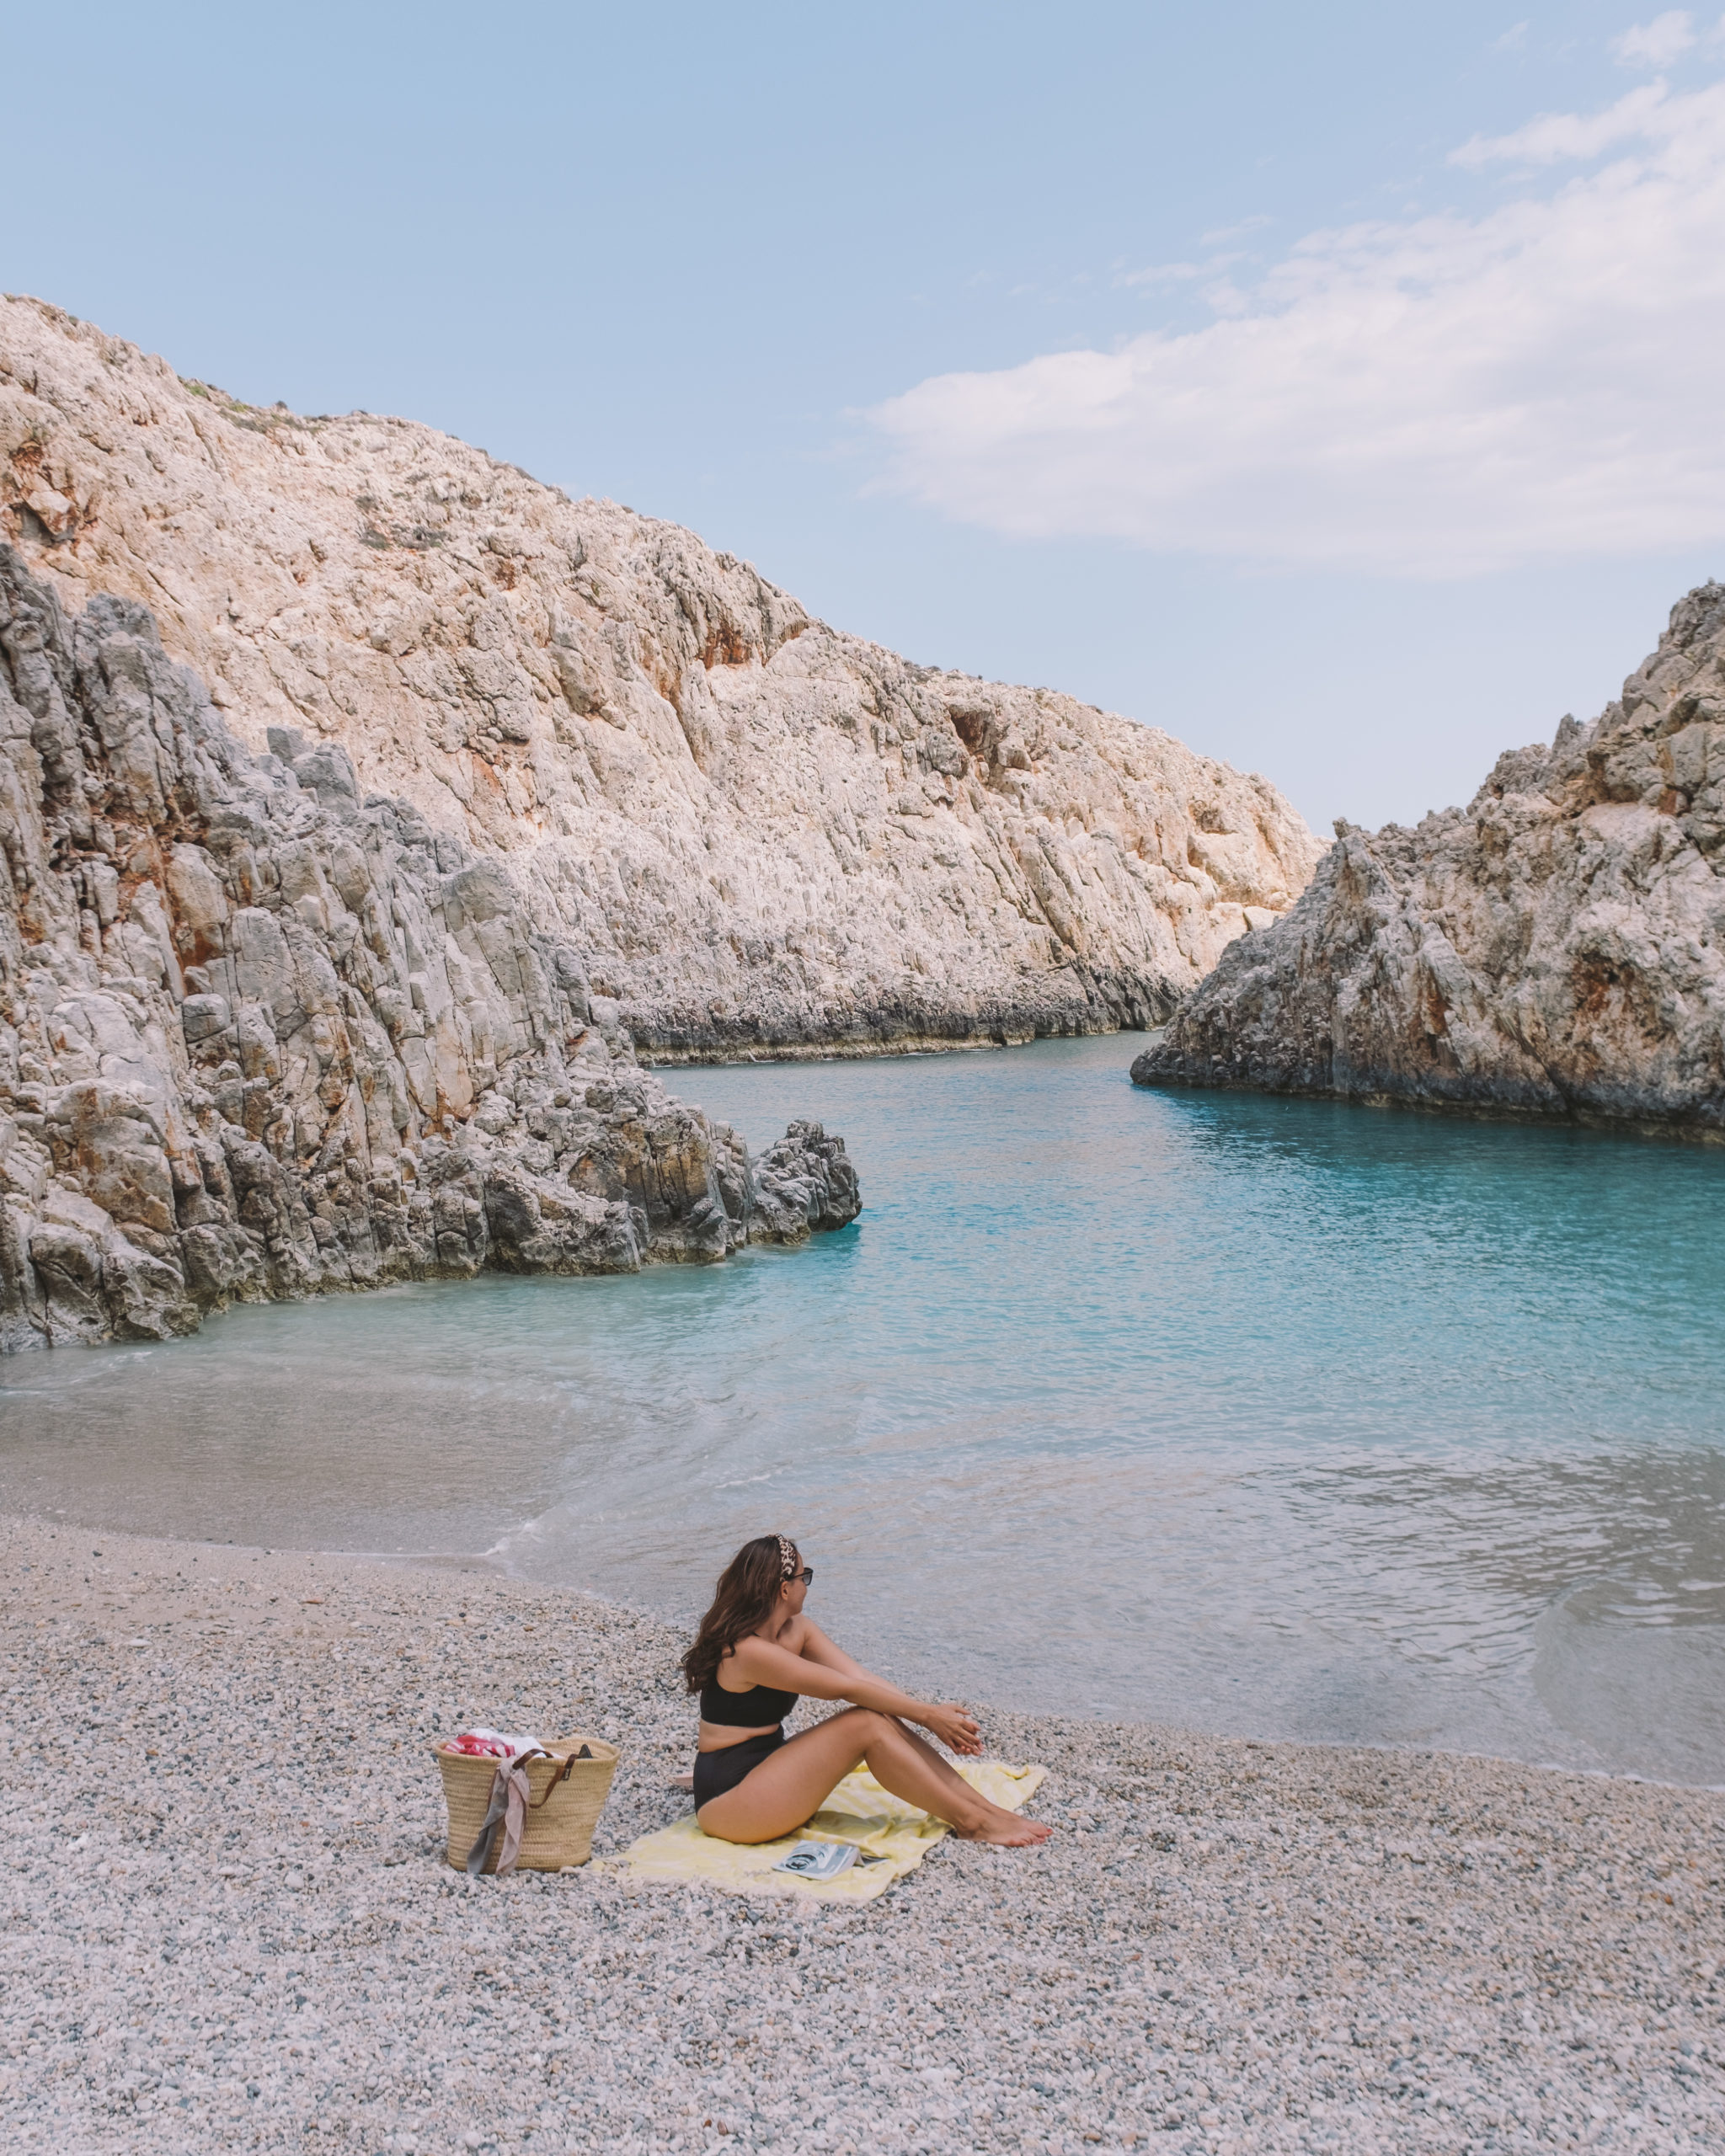 Crete's most beautiful beach